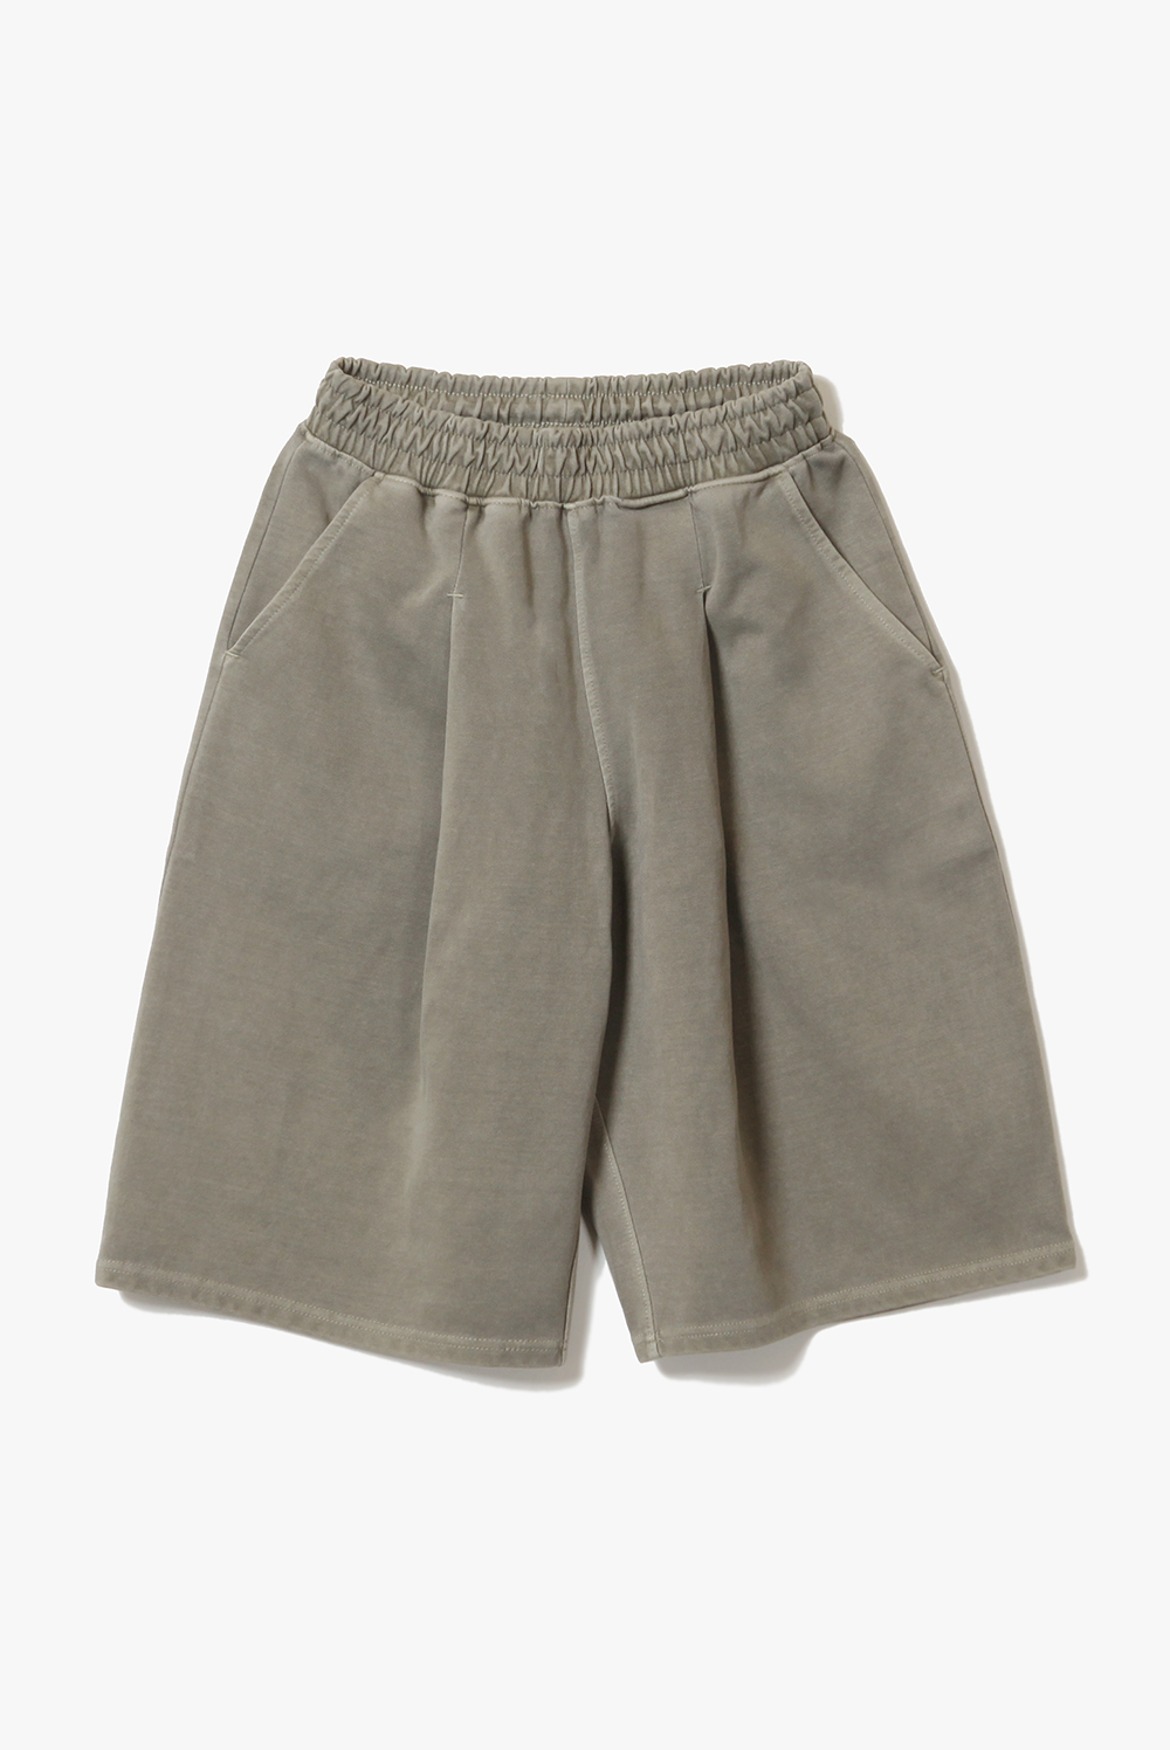 Deep One Tuck Pigment Sweat Shorts [Khaki]